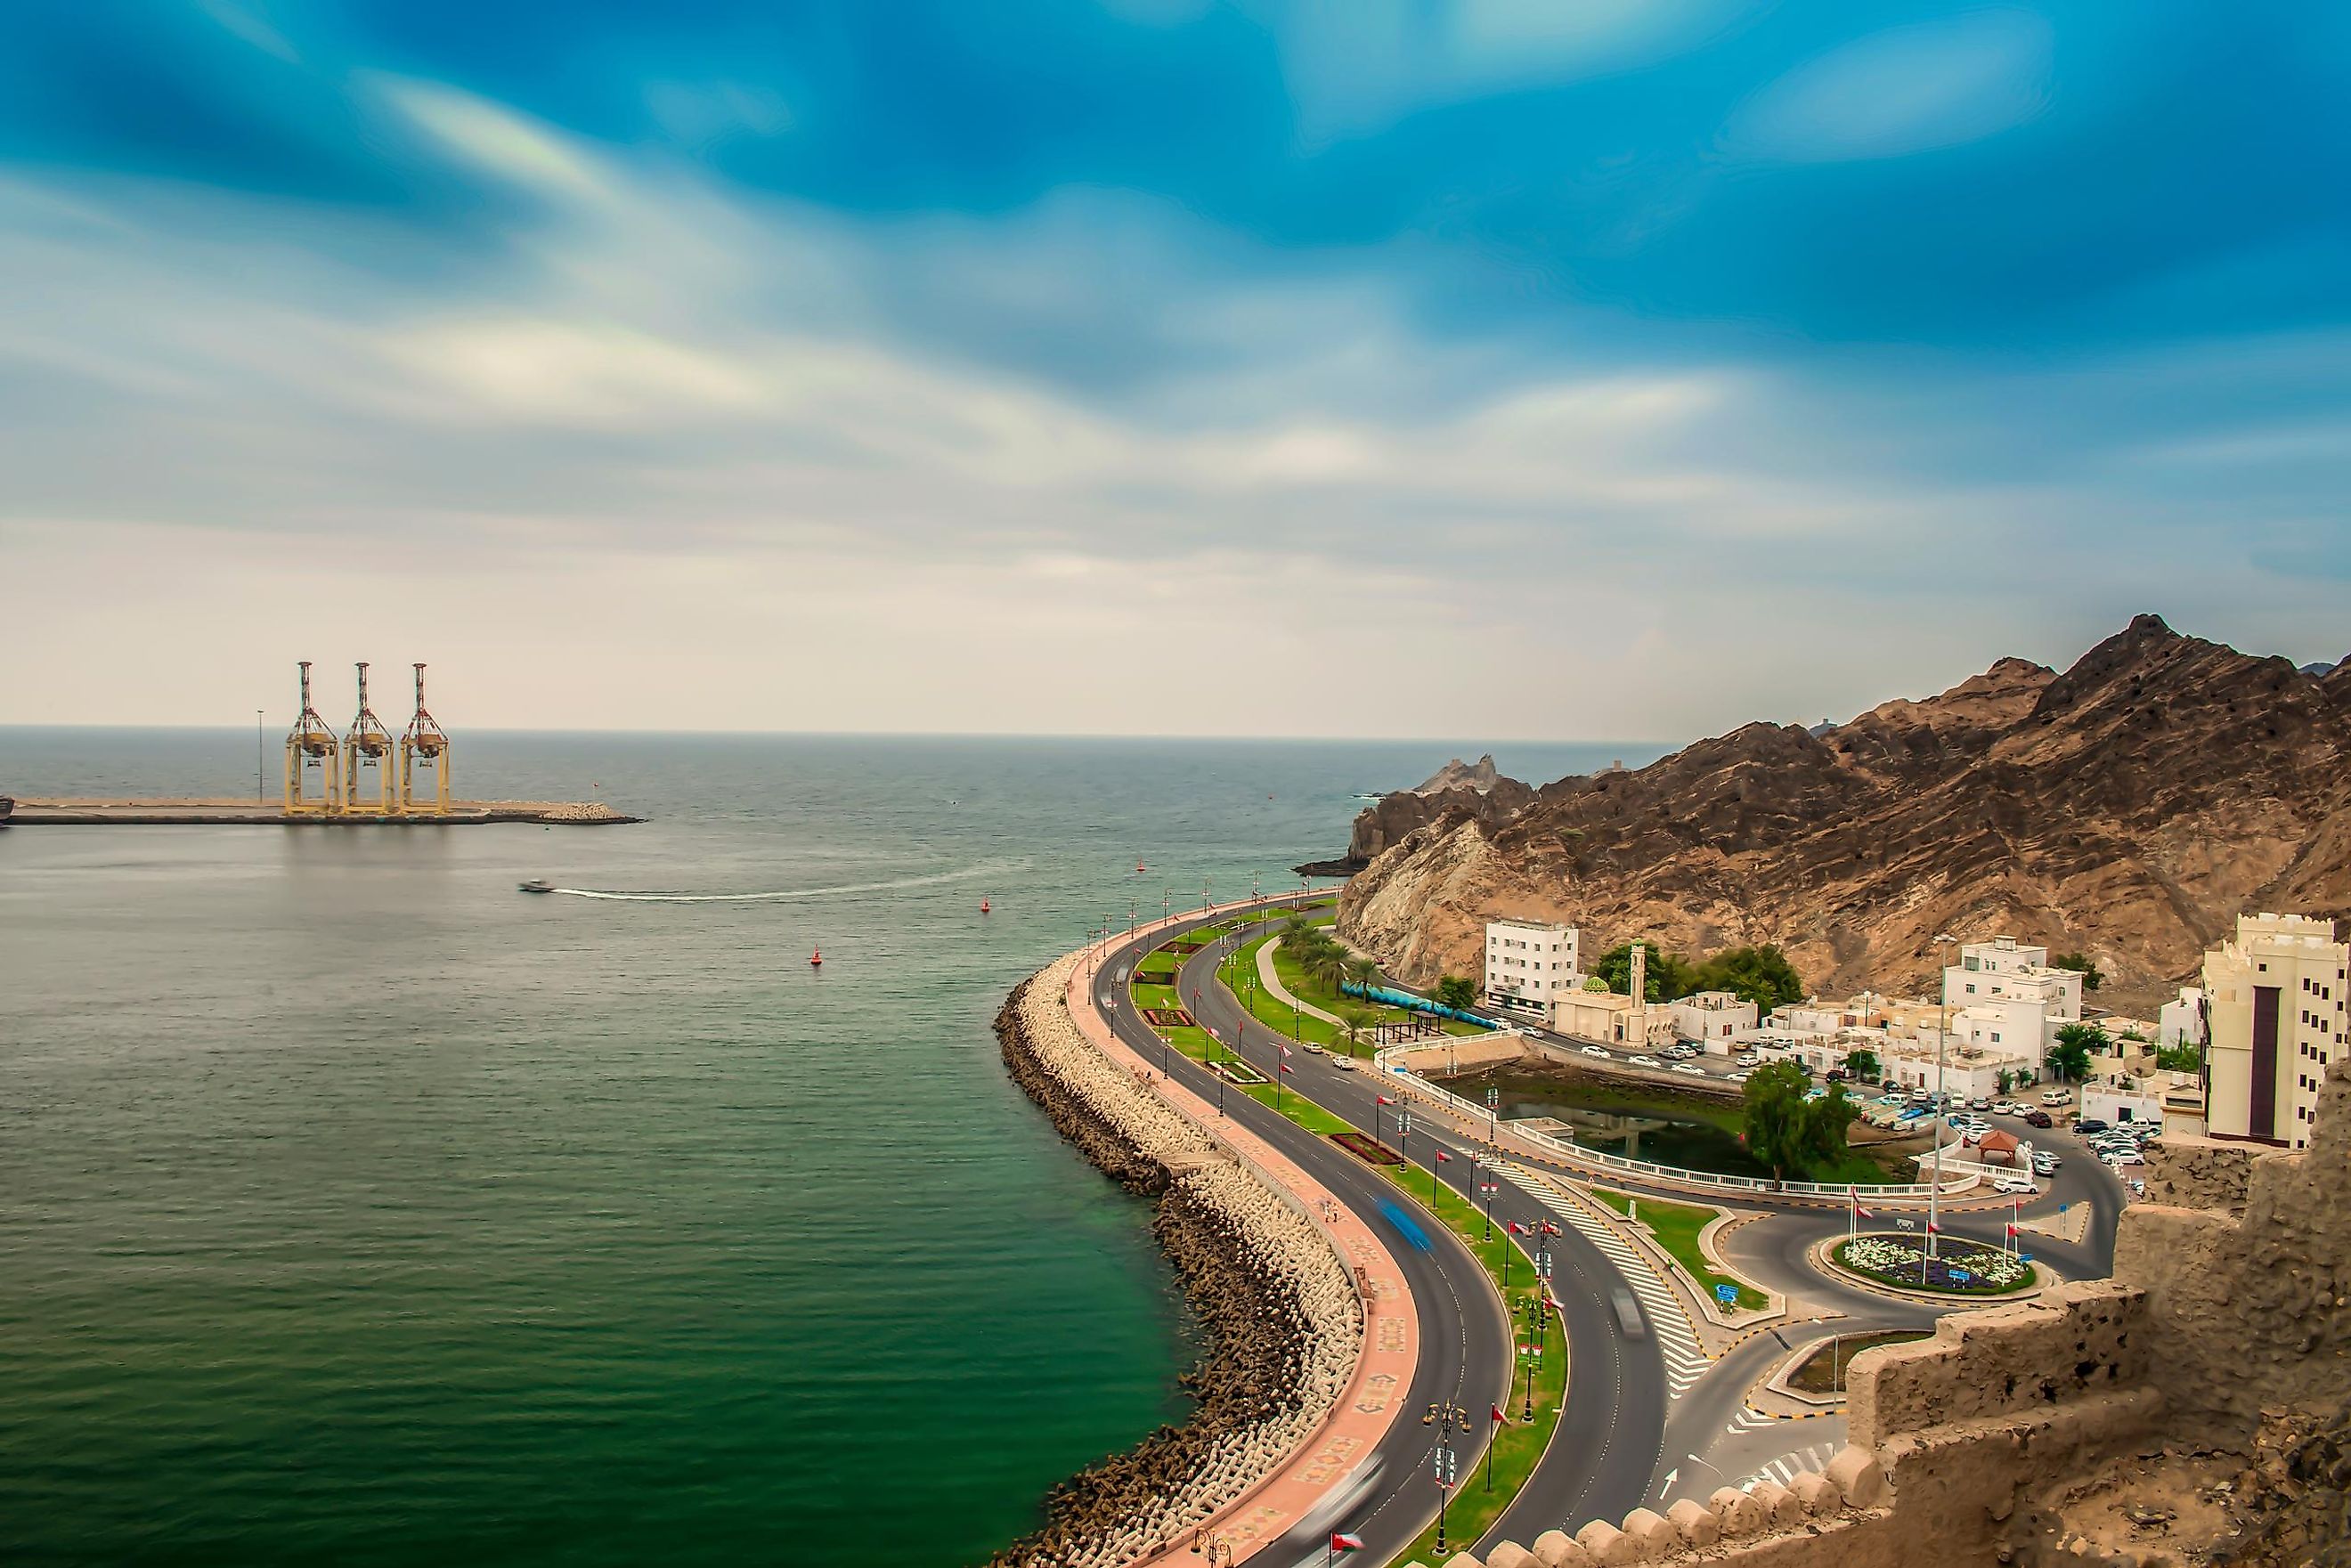 Muttrah Corniche on the Gulf of Oman, Muscat, Oman.